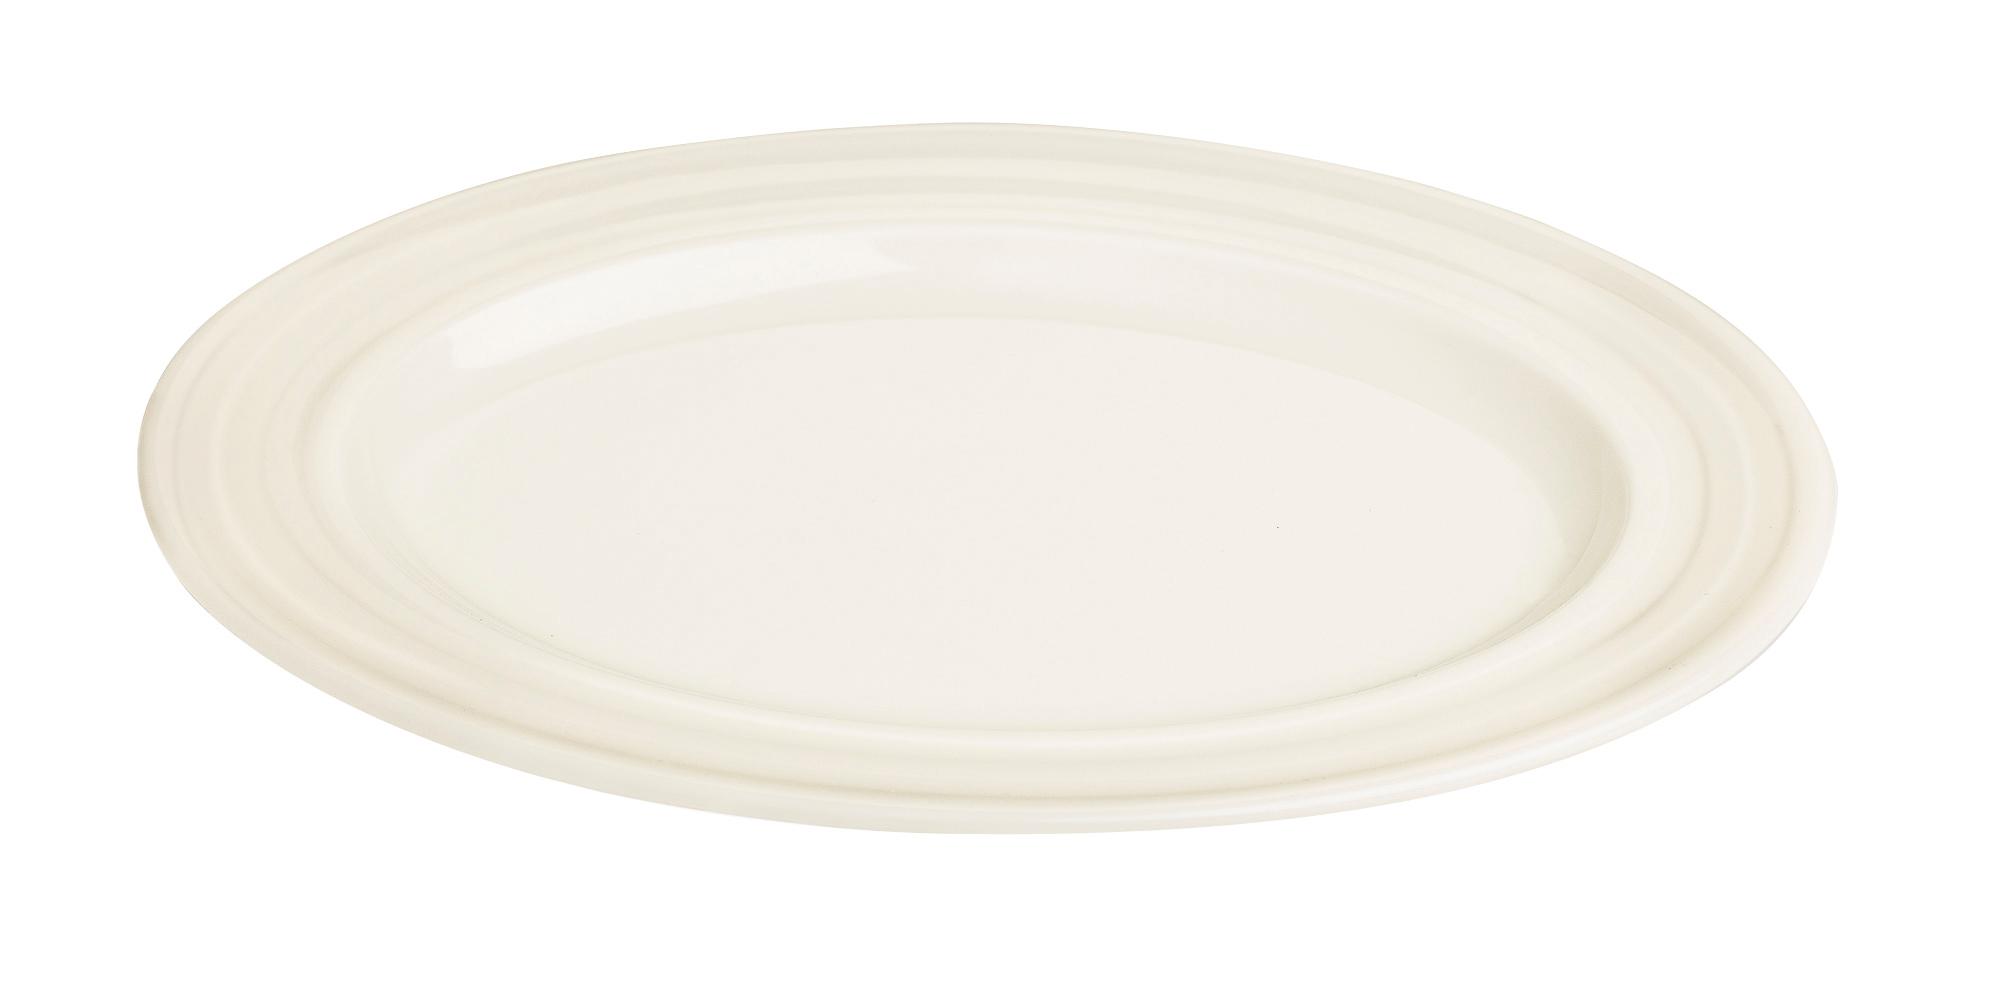 Perla flat plate, 270mm